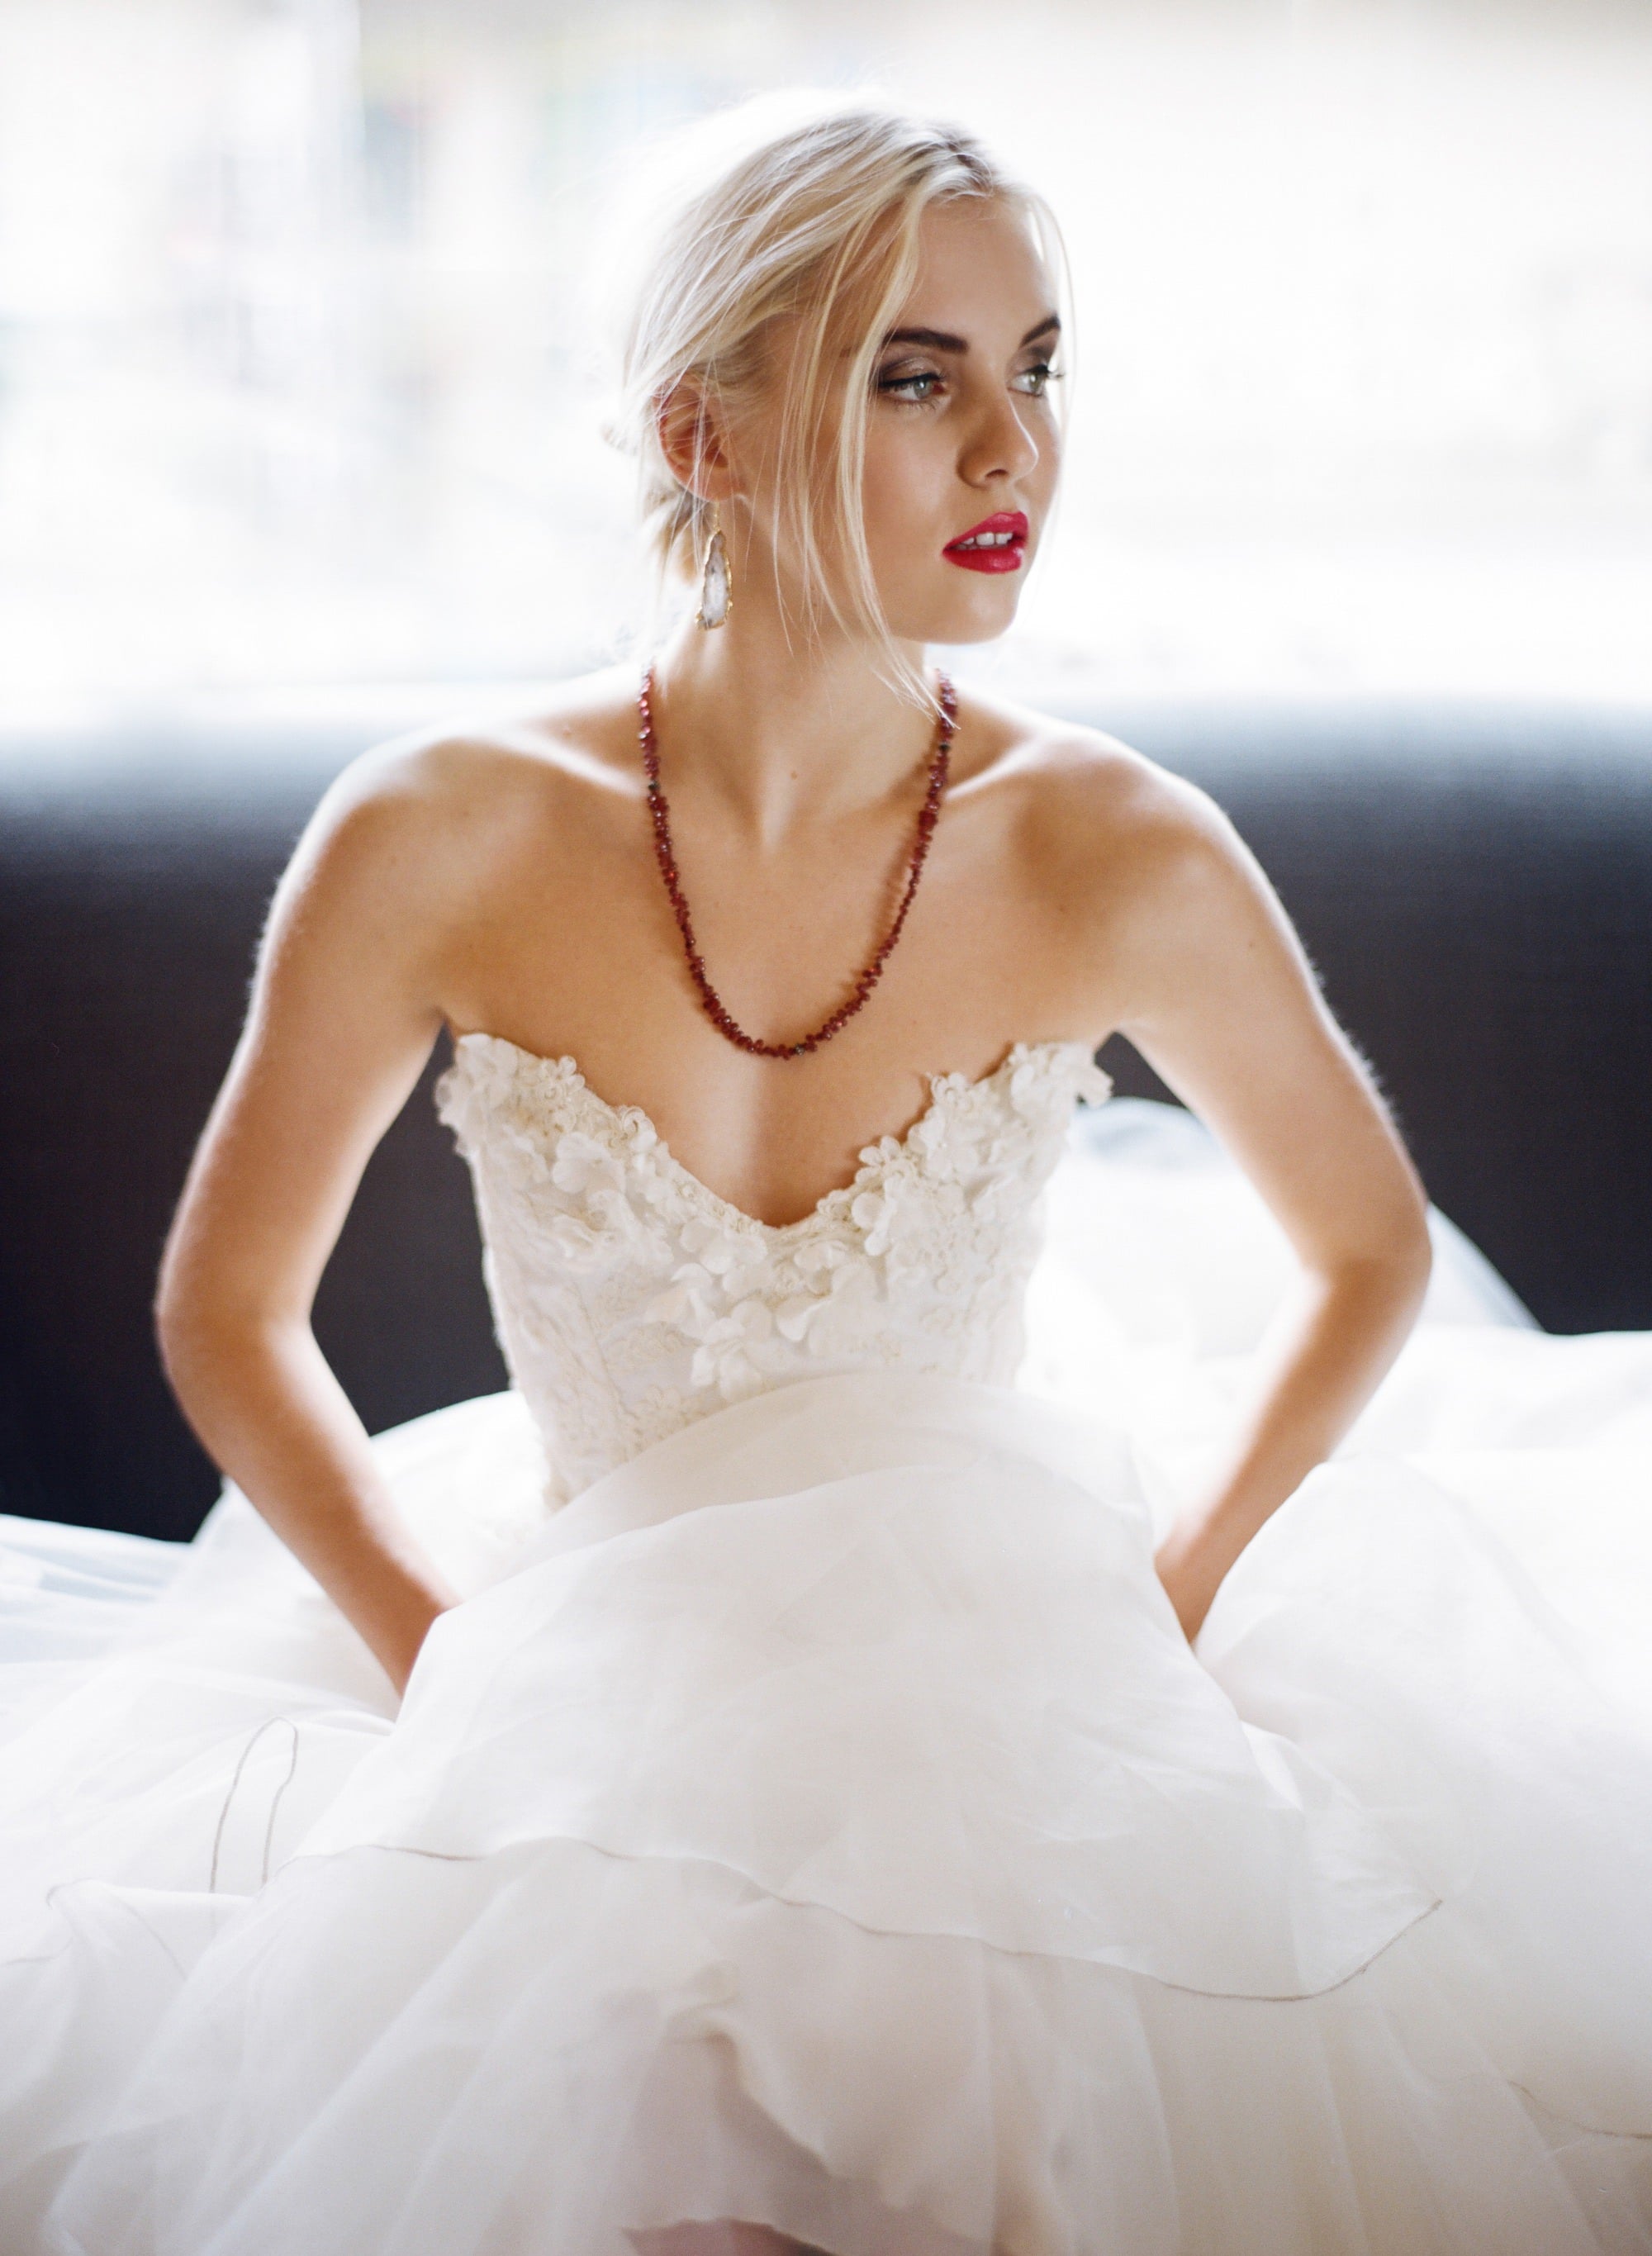 simply-splendid.com, Claire La Faye gown, Oregon Wedding Photographer, Elopement, Garnet, Opal 28, Fashion forward bride